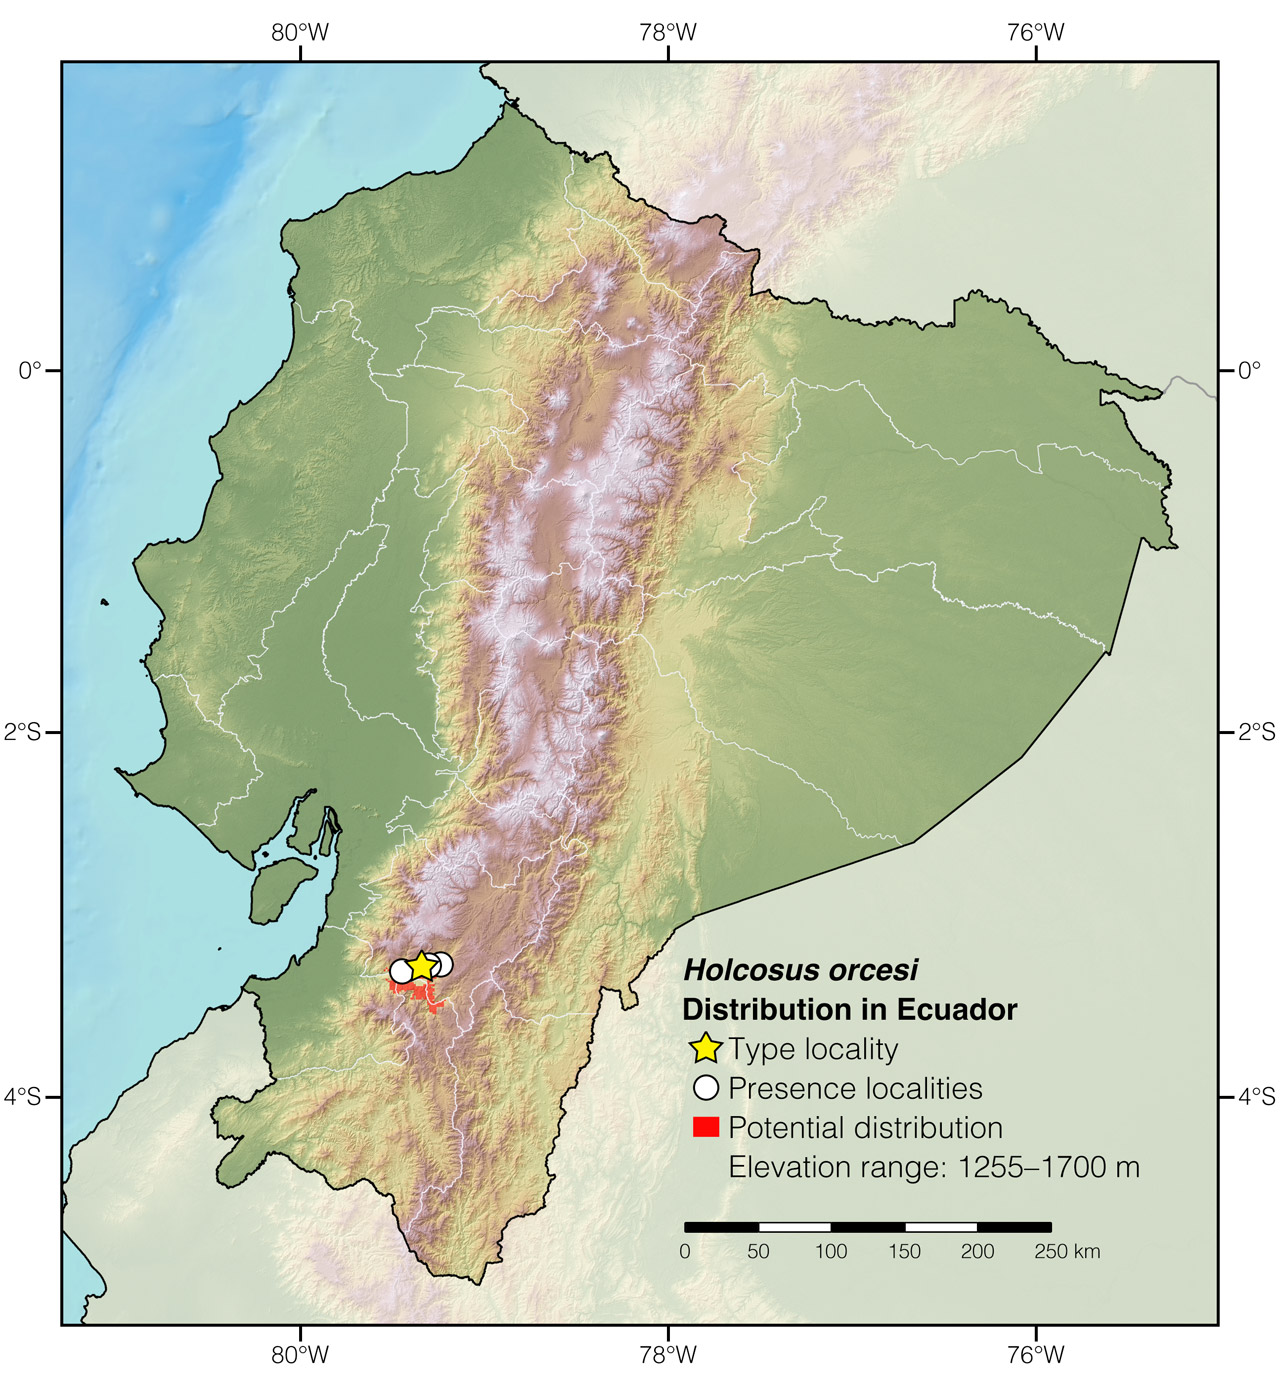 Distribution of Holcosus orcesi in Ecuador